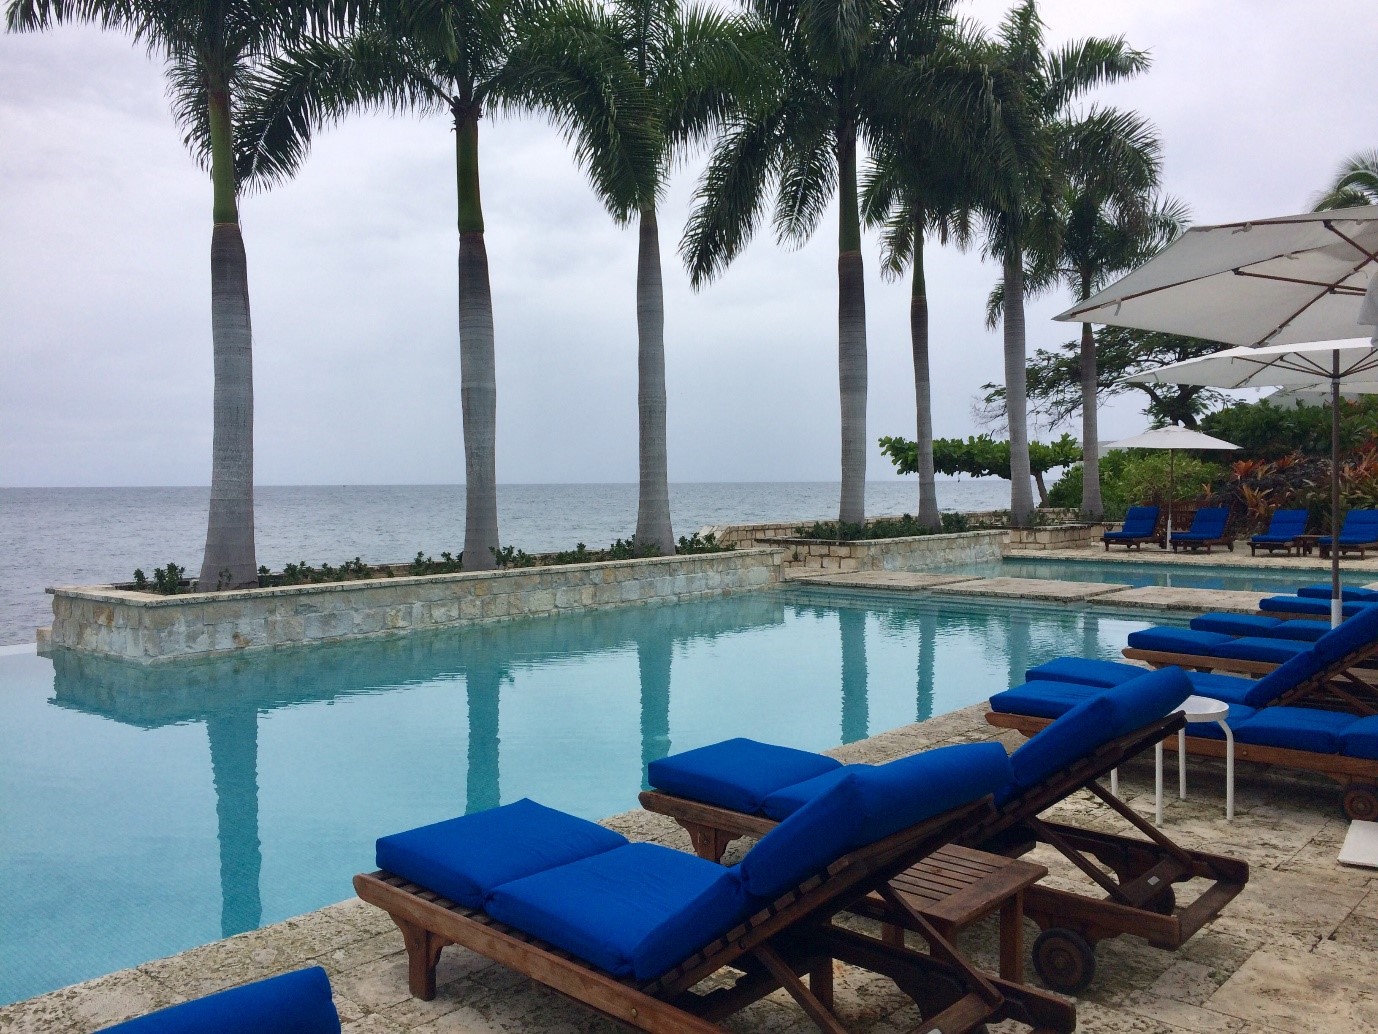 Infinity pool at Round Hill Resort & Villas in Jamaica